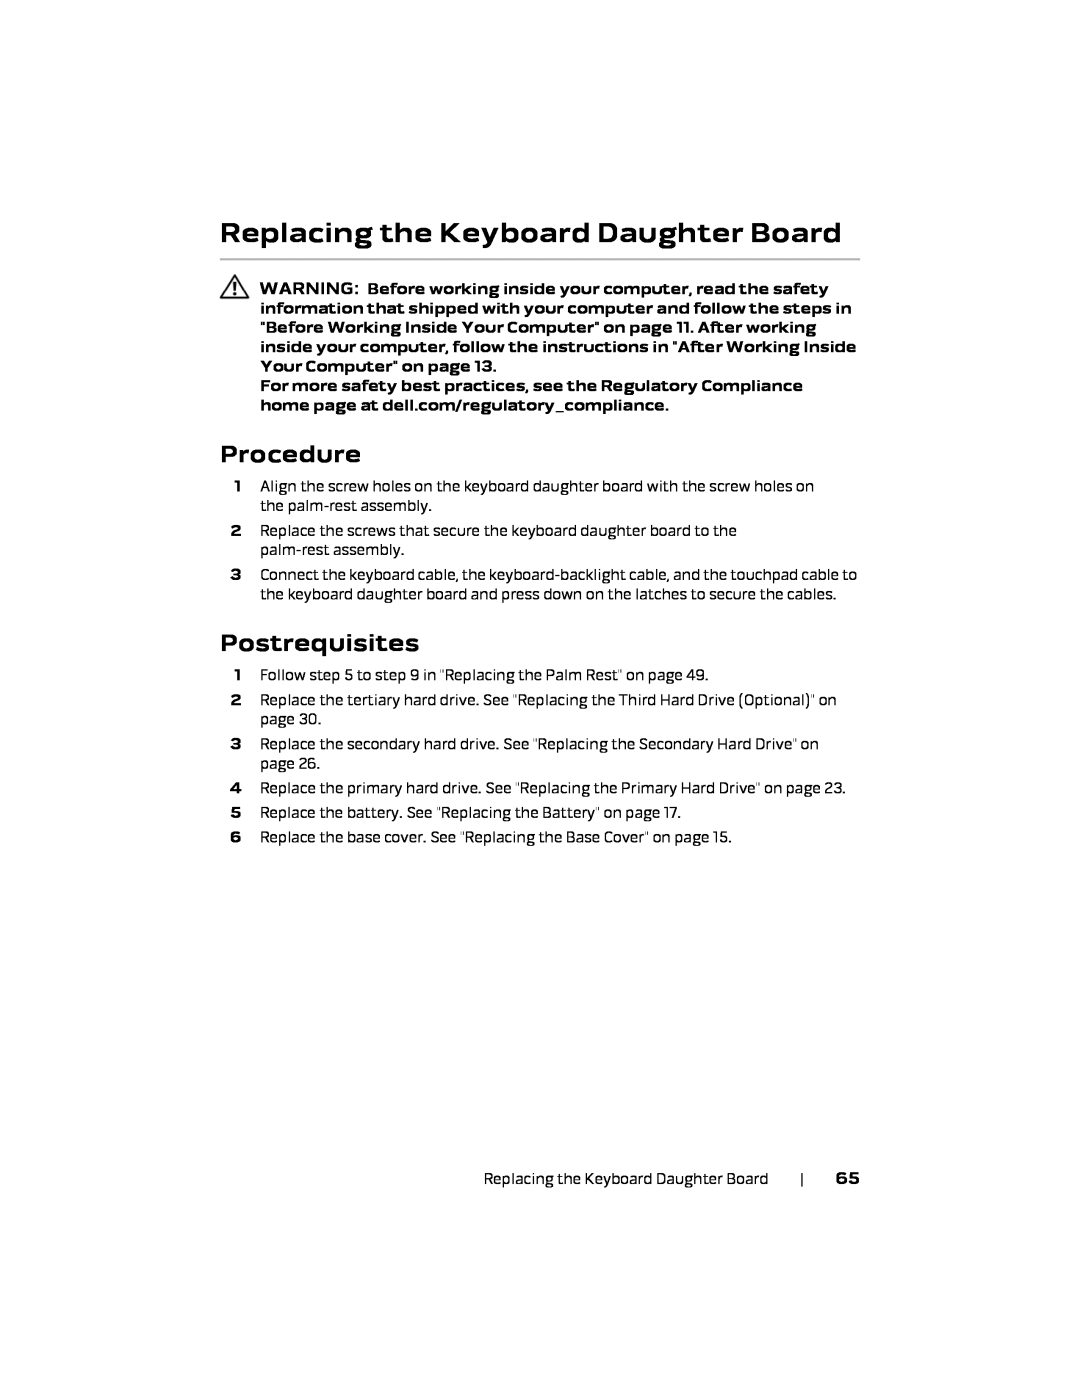 Alienware 17 R1, P18E owner manual Replacing the Keyboard Daughter Board, Procedure, Postrequisites 